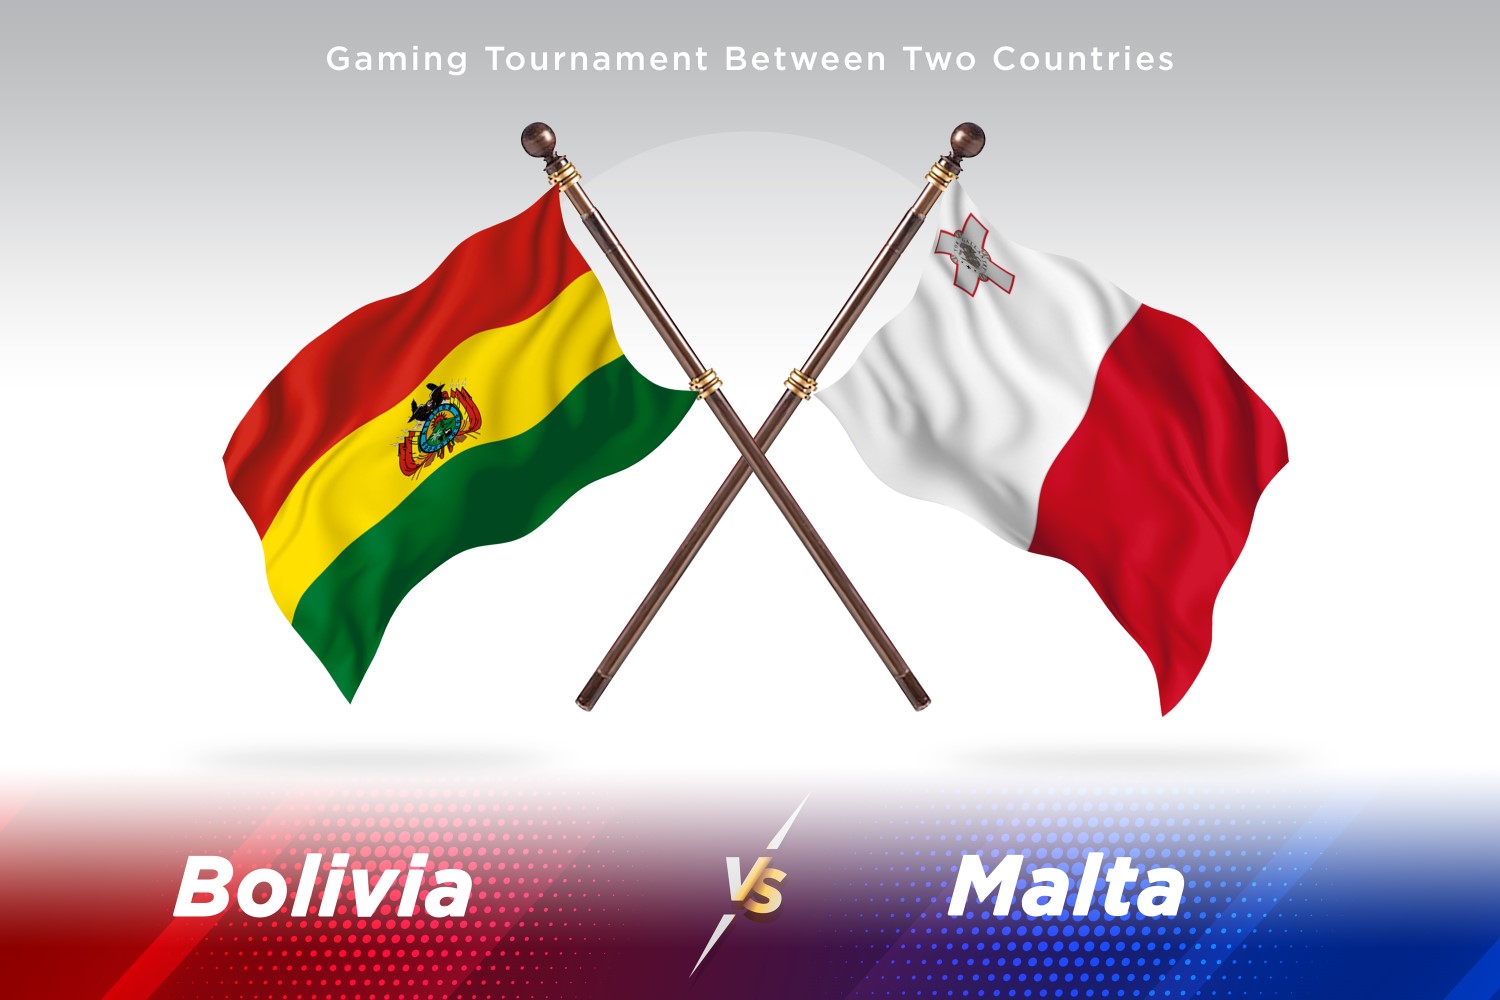 Bolivia versus Malta Two Flags